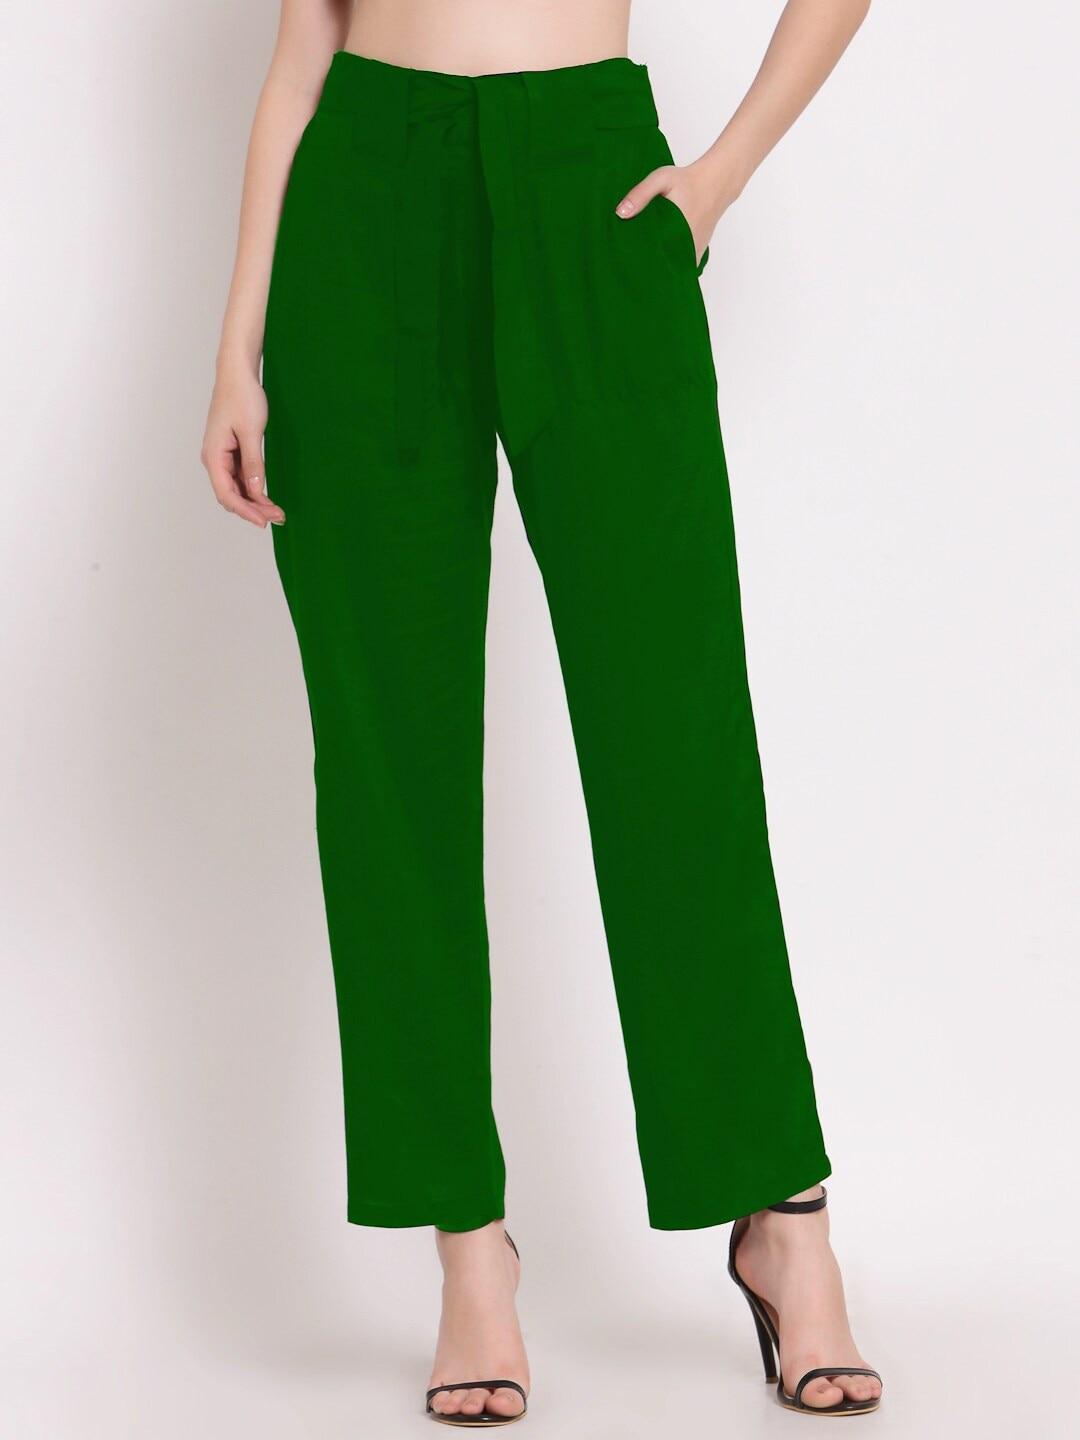 patrorna-women-mid-rise-smart-straight-fit-plain-culotte-trousers